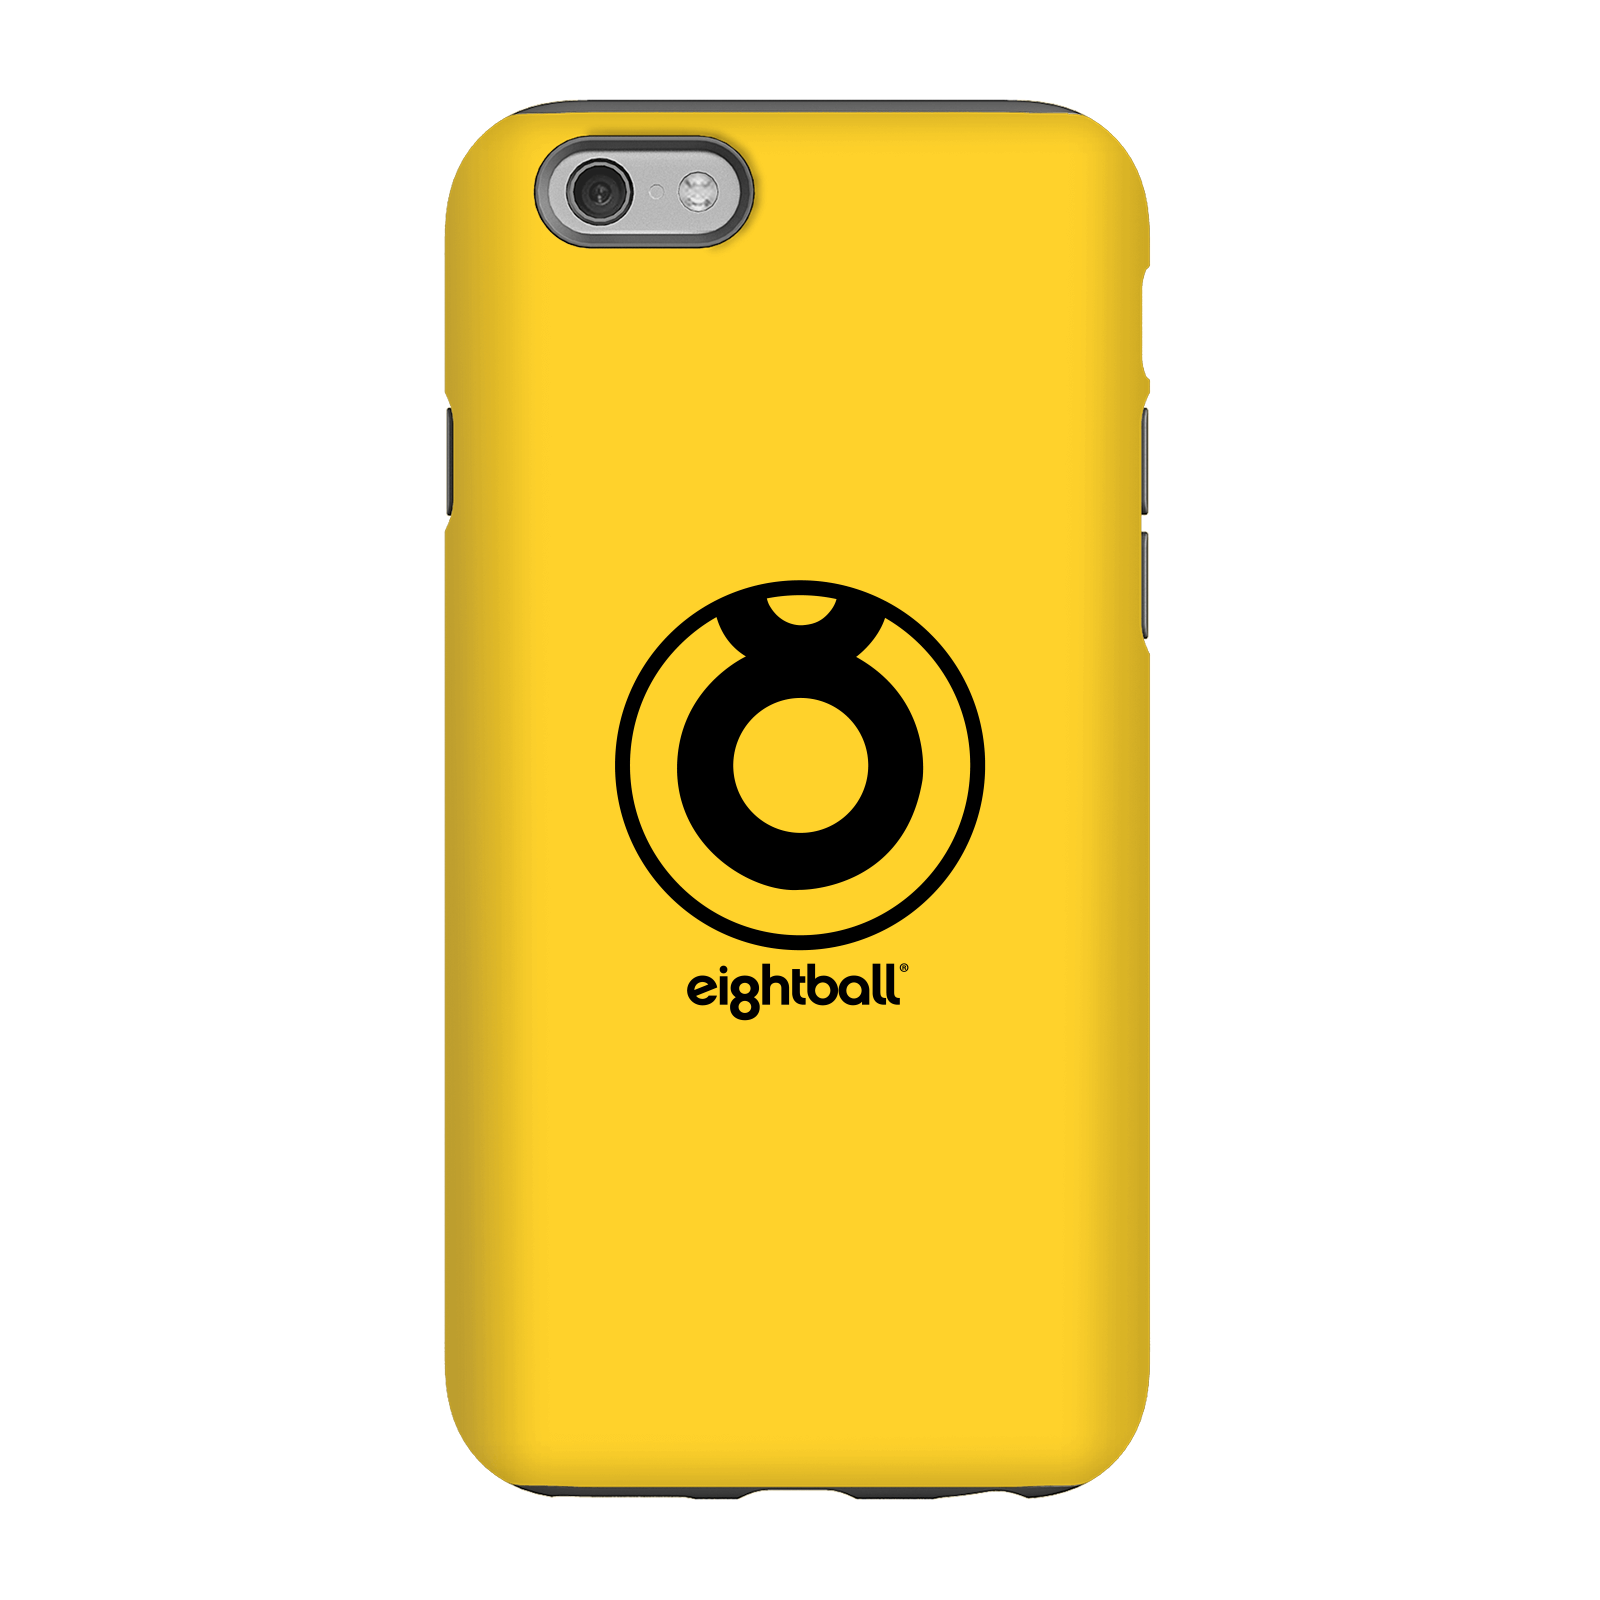 Funda Móvil Ei8htball Large Circle Logo para iPhone y Android - iPhone 6 - Carcasa doble capa - Mate